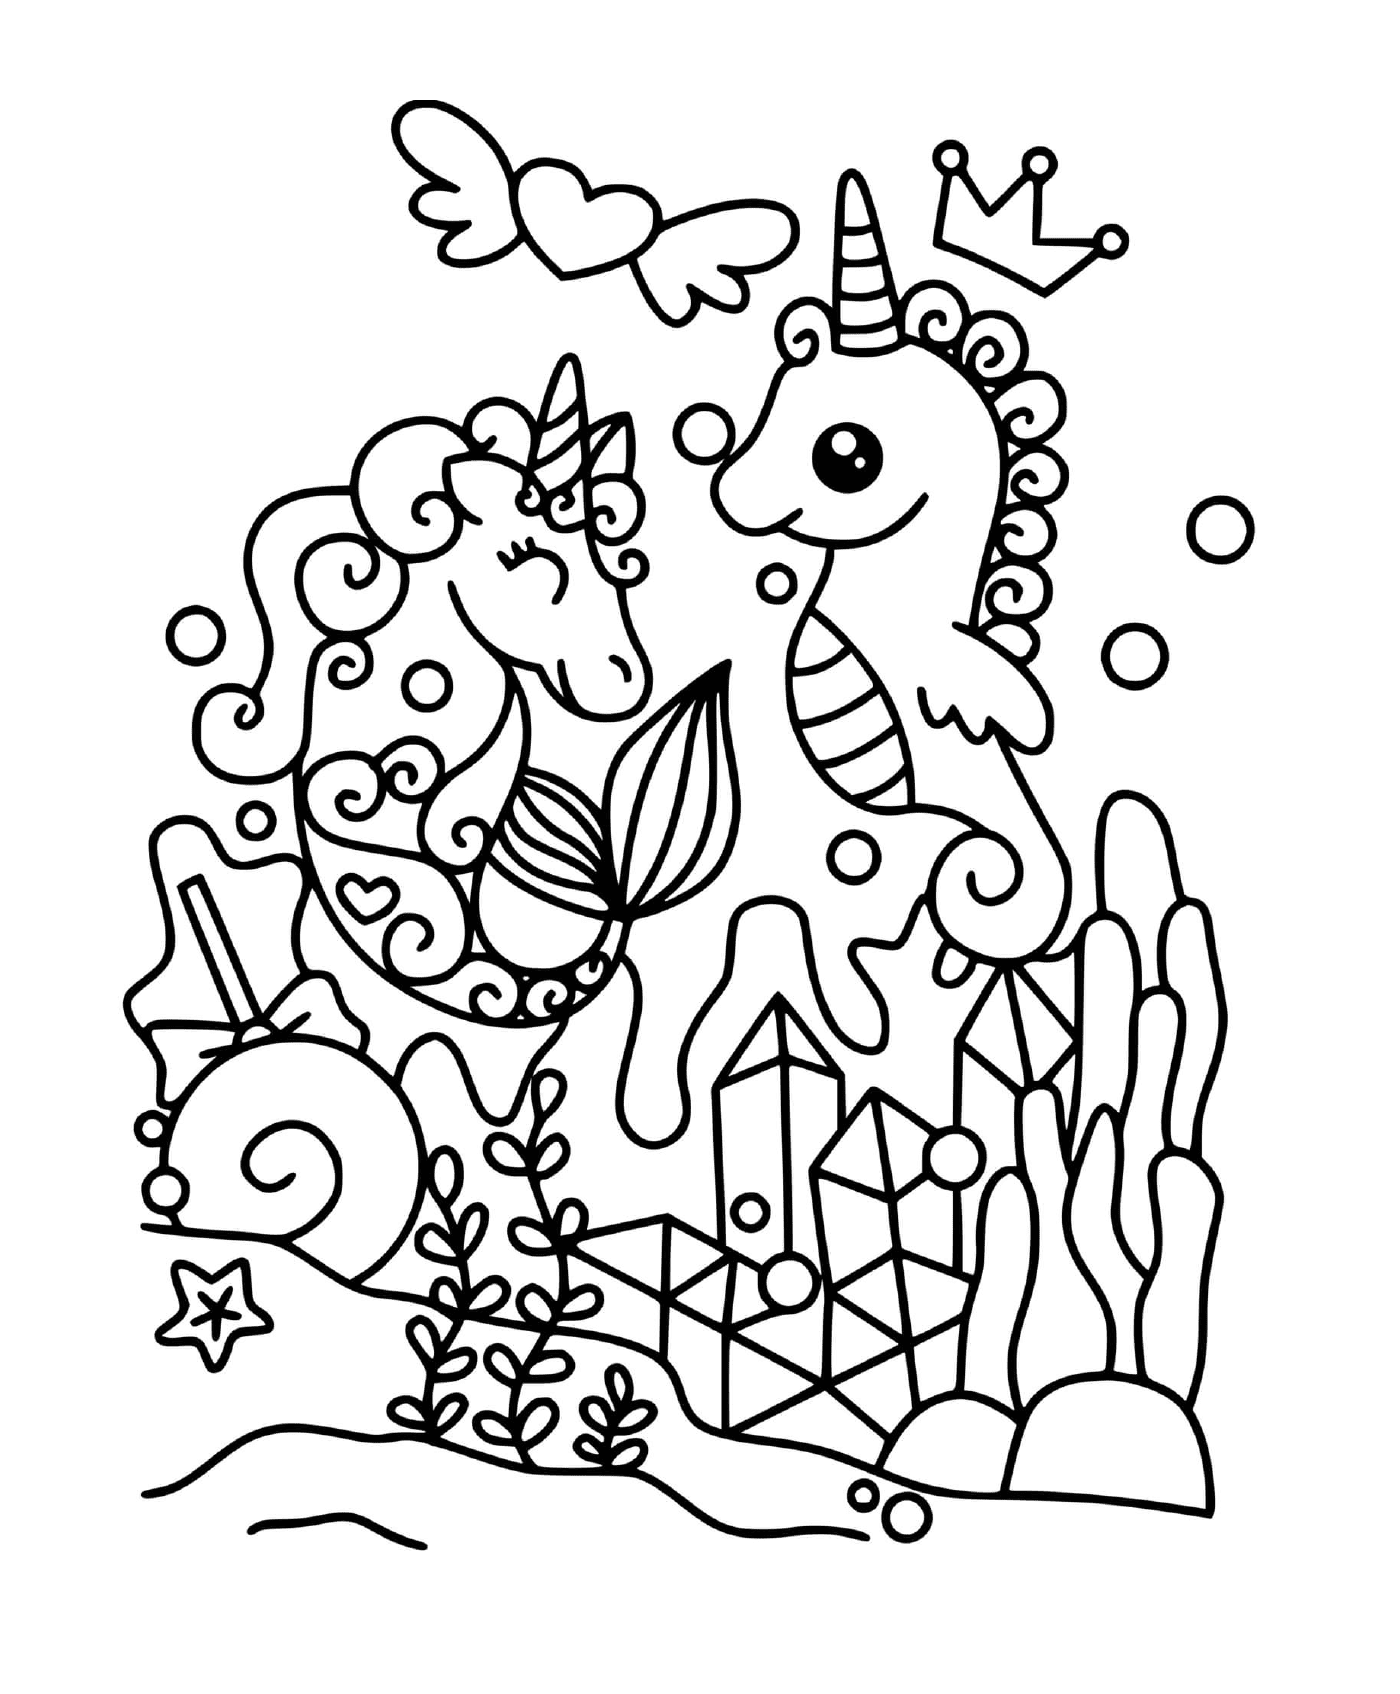  Unicorn under magic water 